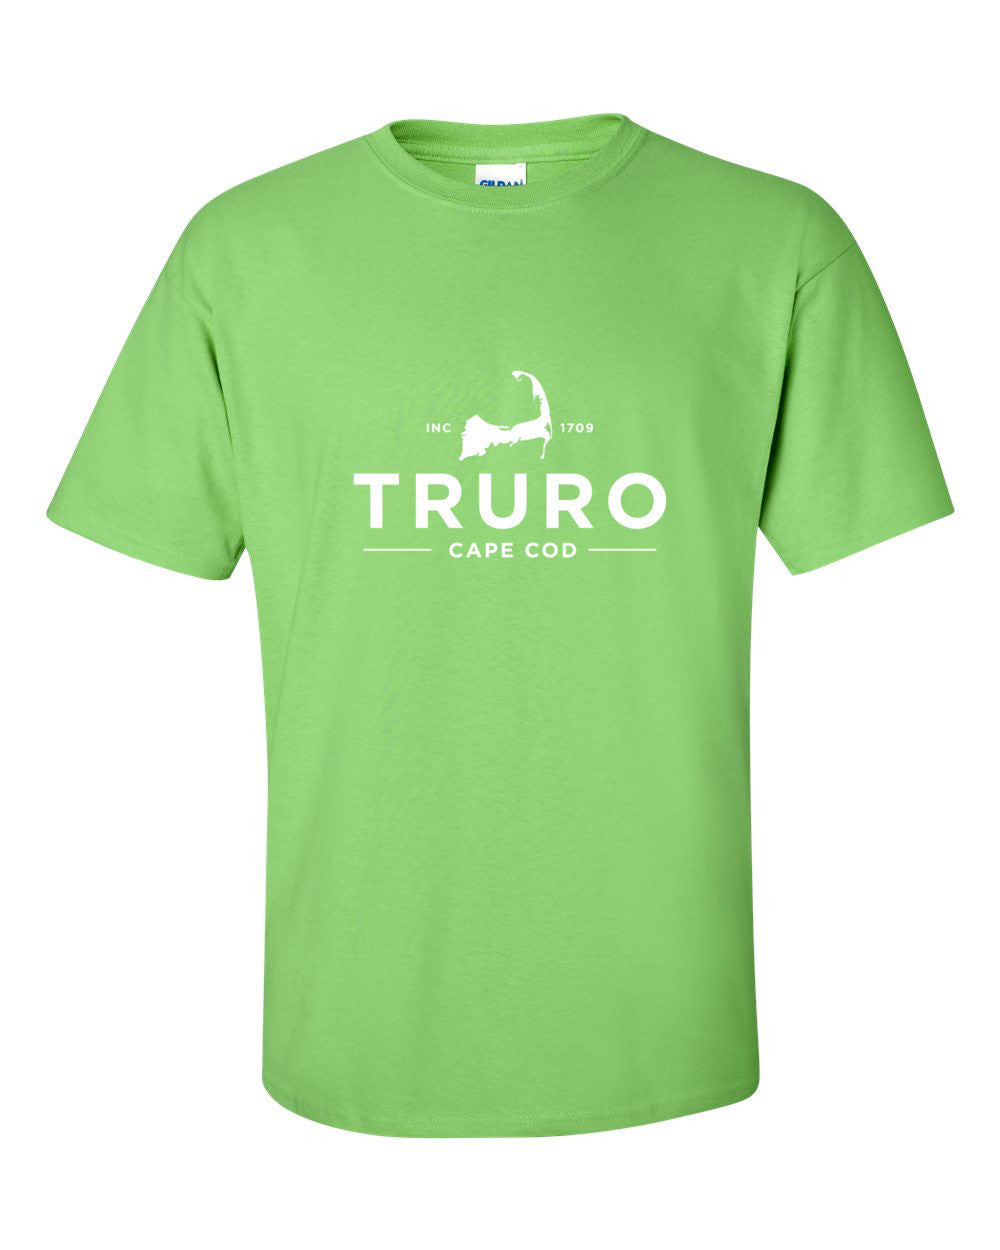 Truro MA T Shirts, Shirts, Hats & Tees | Cape Cod Insta